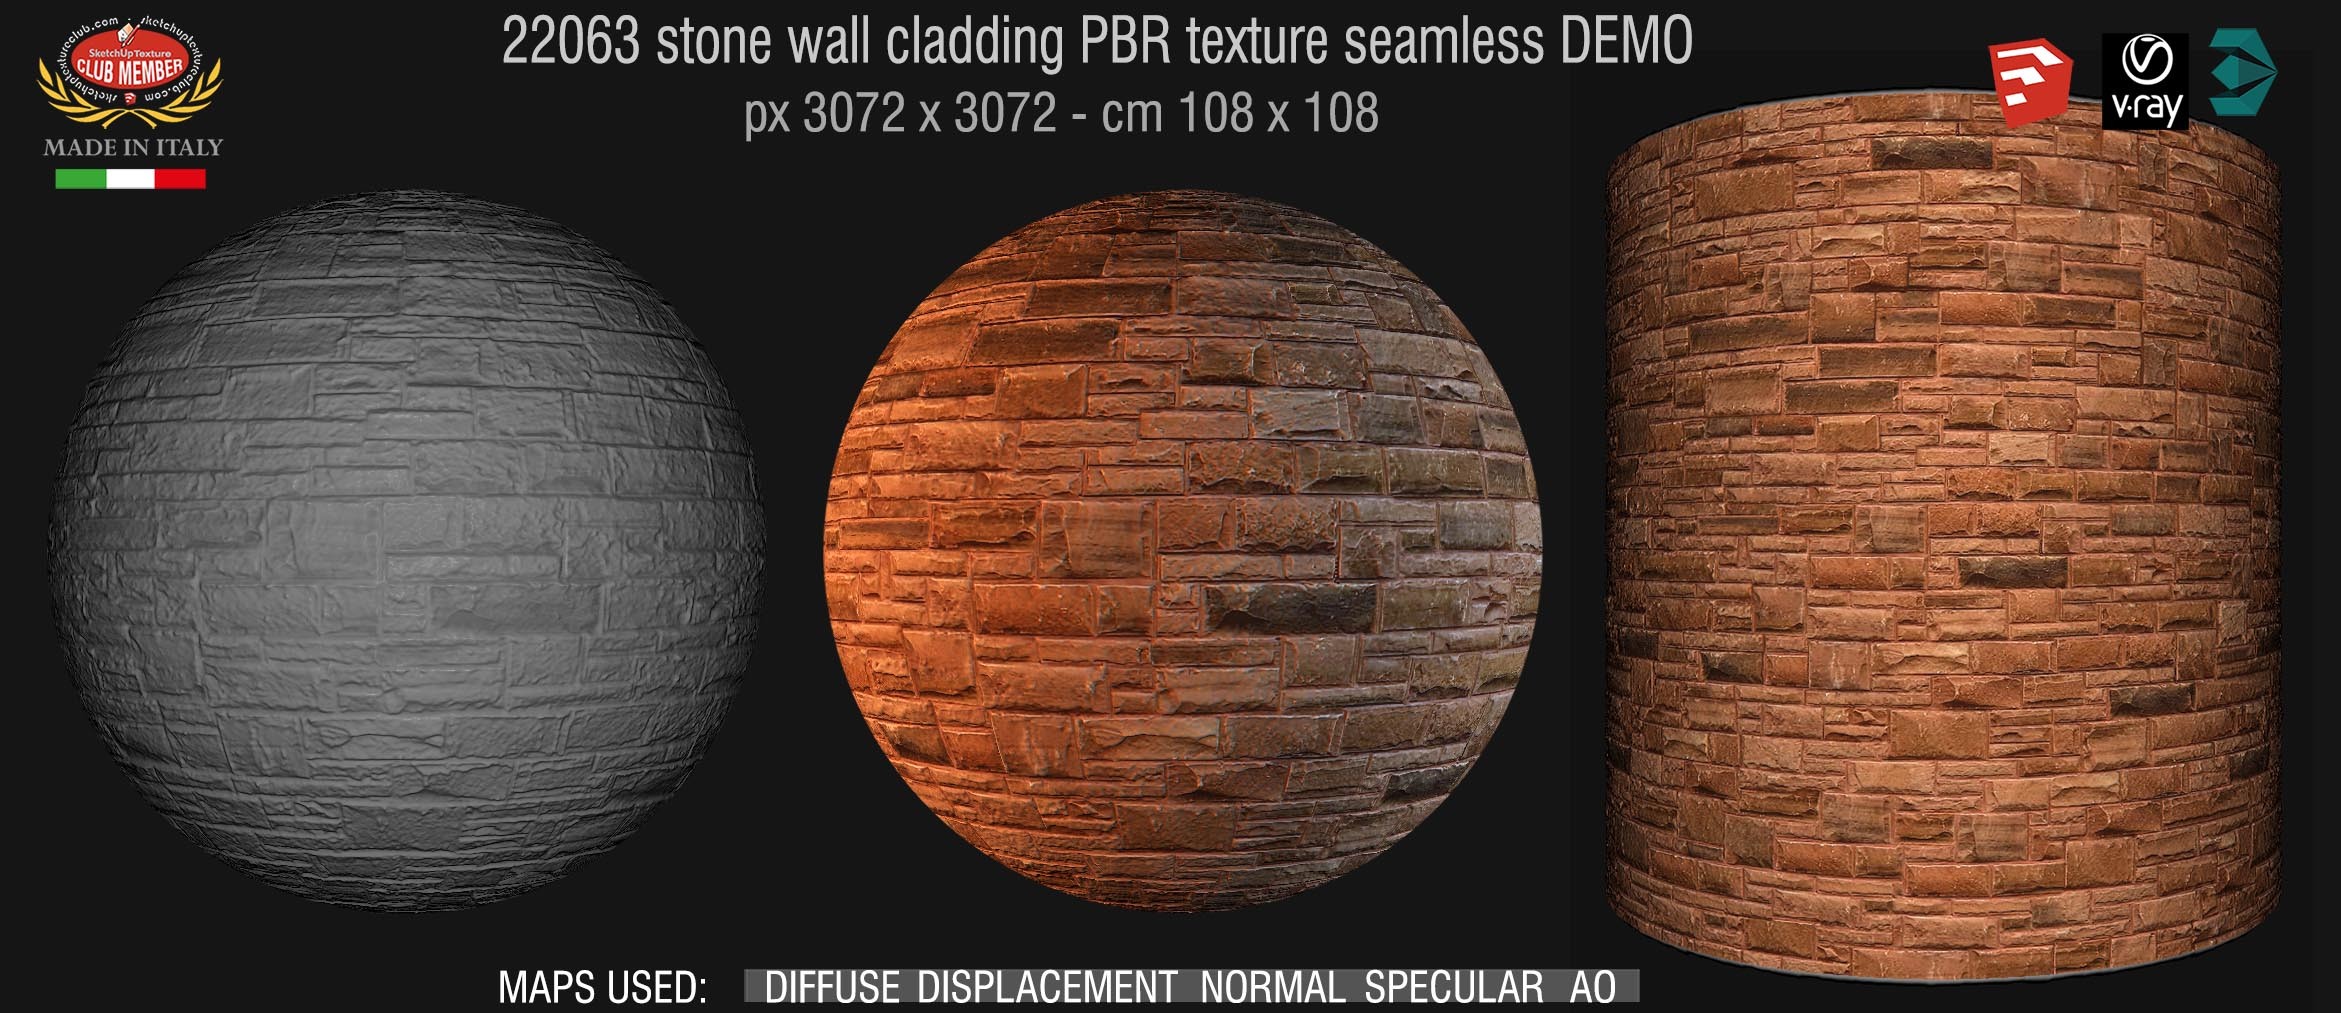 22063 stone wall cladding PBR texture seamless DEMO